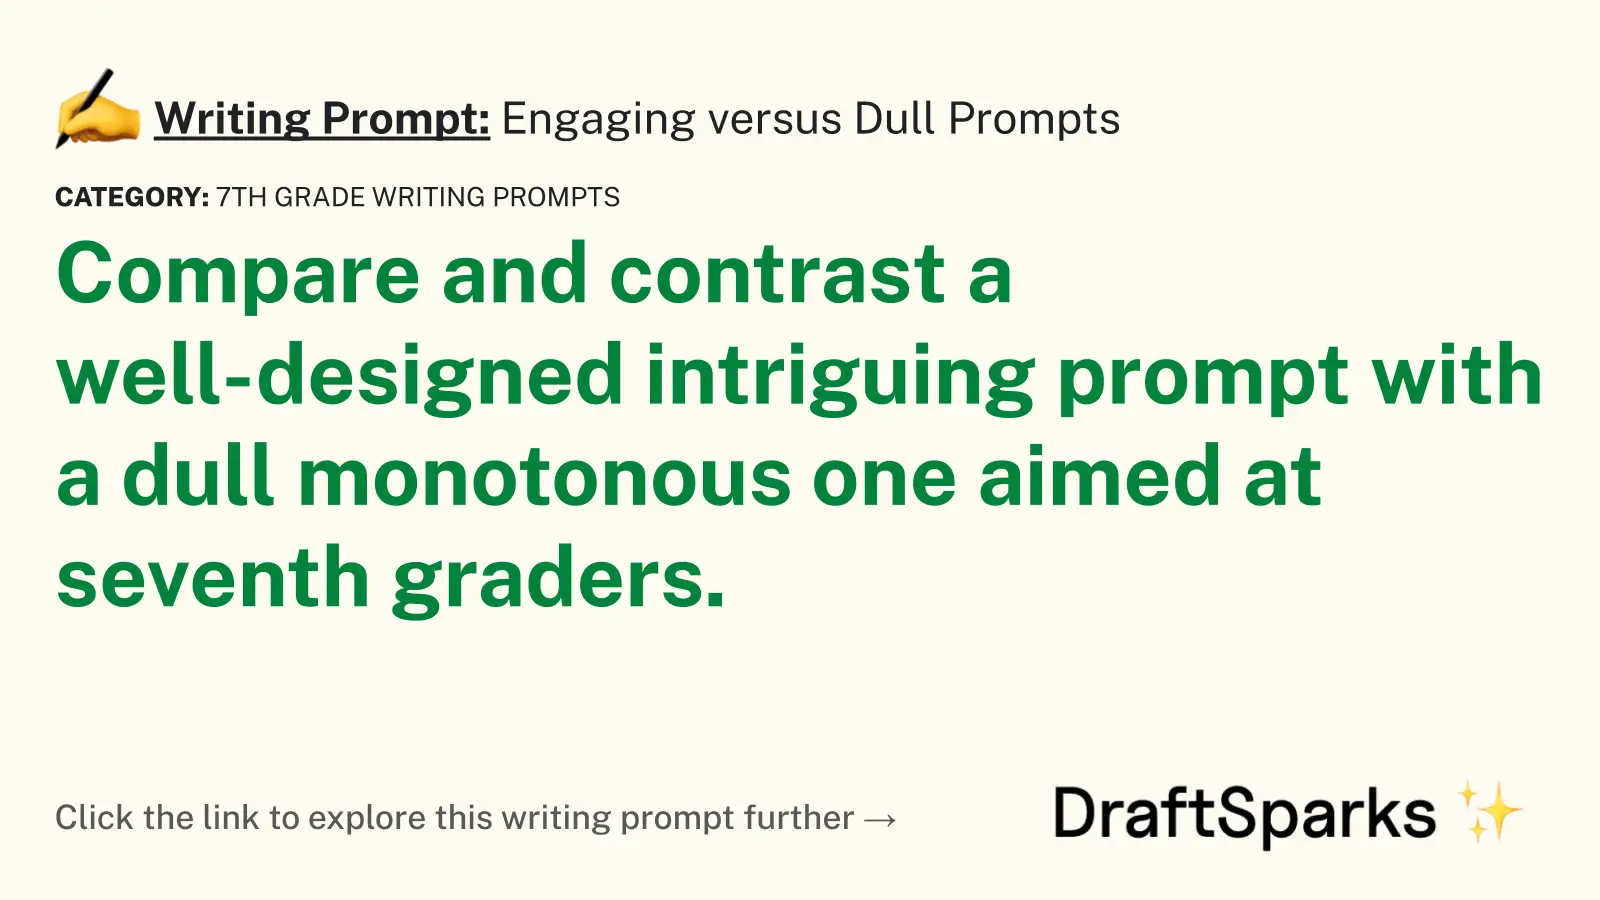 Engaging versus Dull Prompts